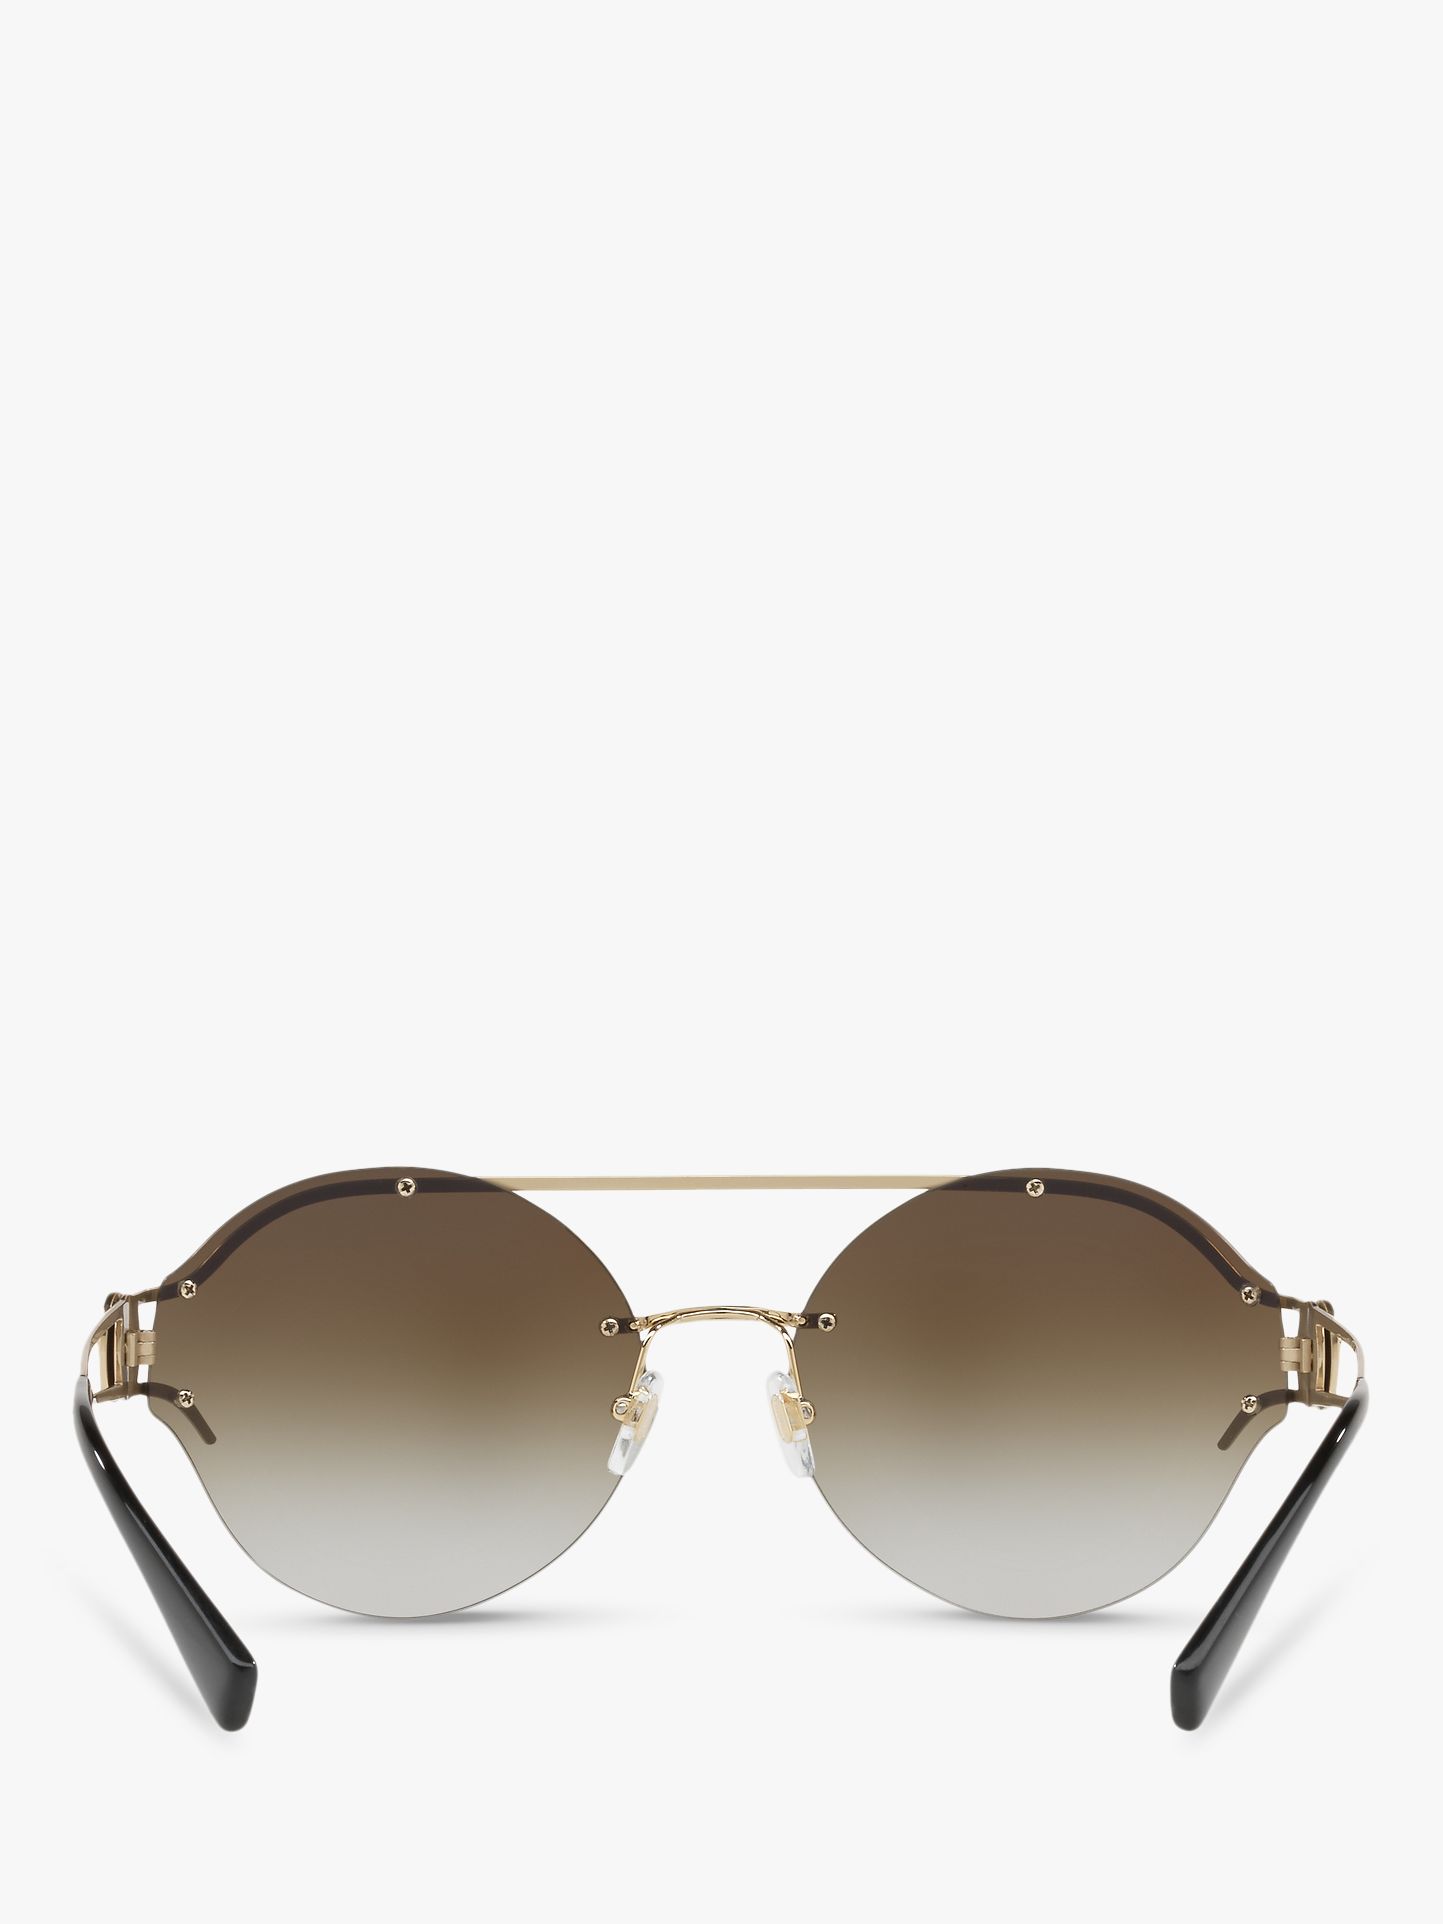 Versace VE2184 Women's Round Sunglasses, Gold/Mirror Gold at John Lewis ...